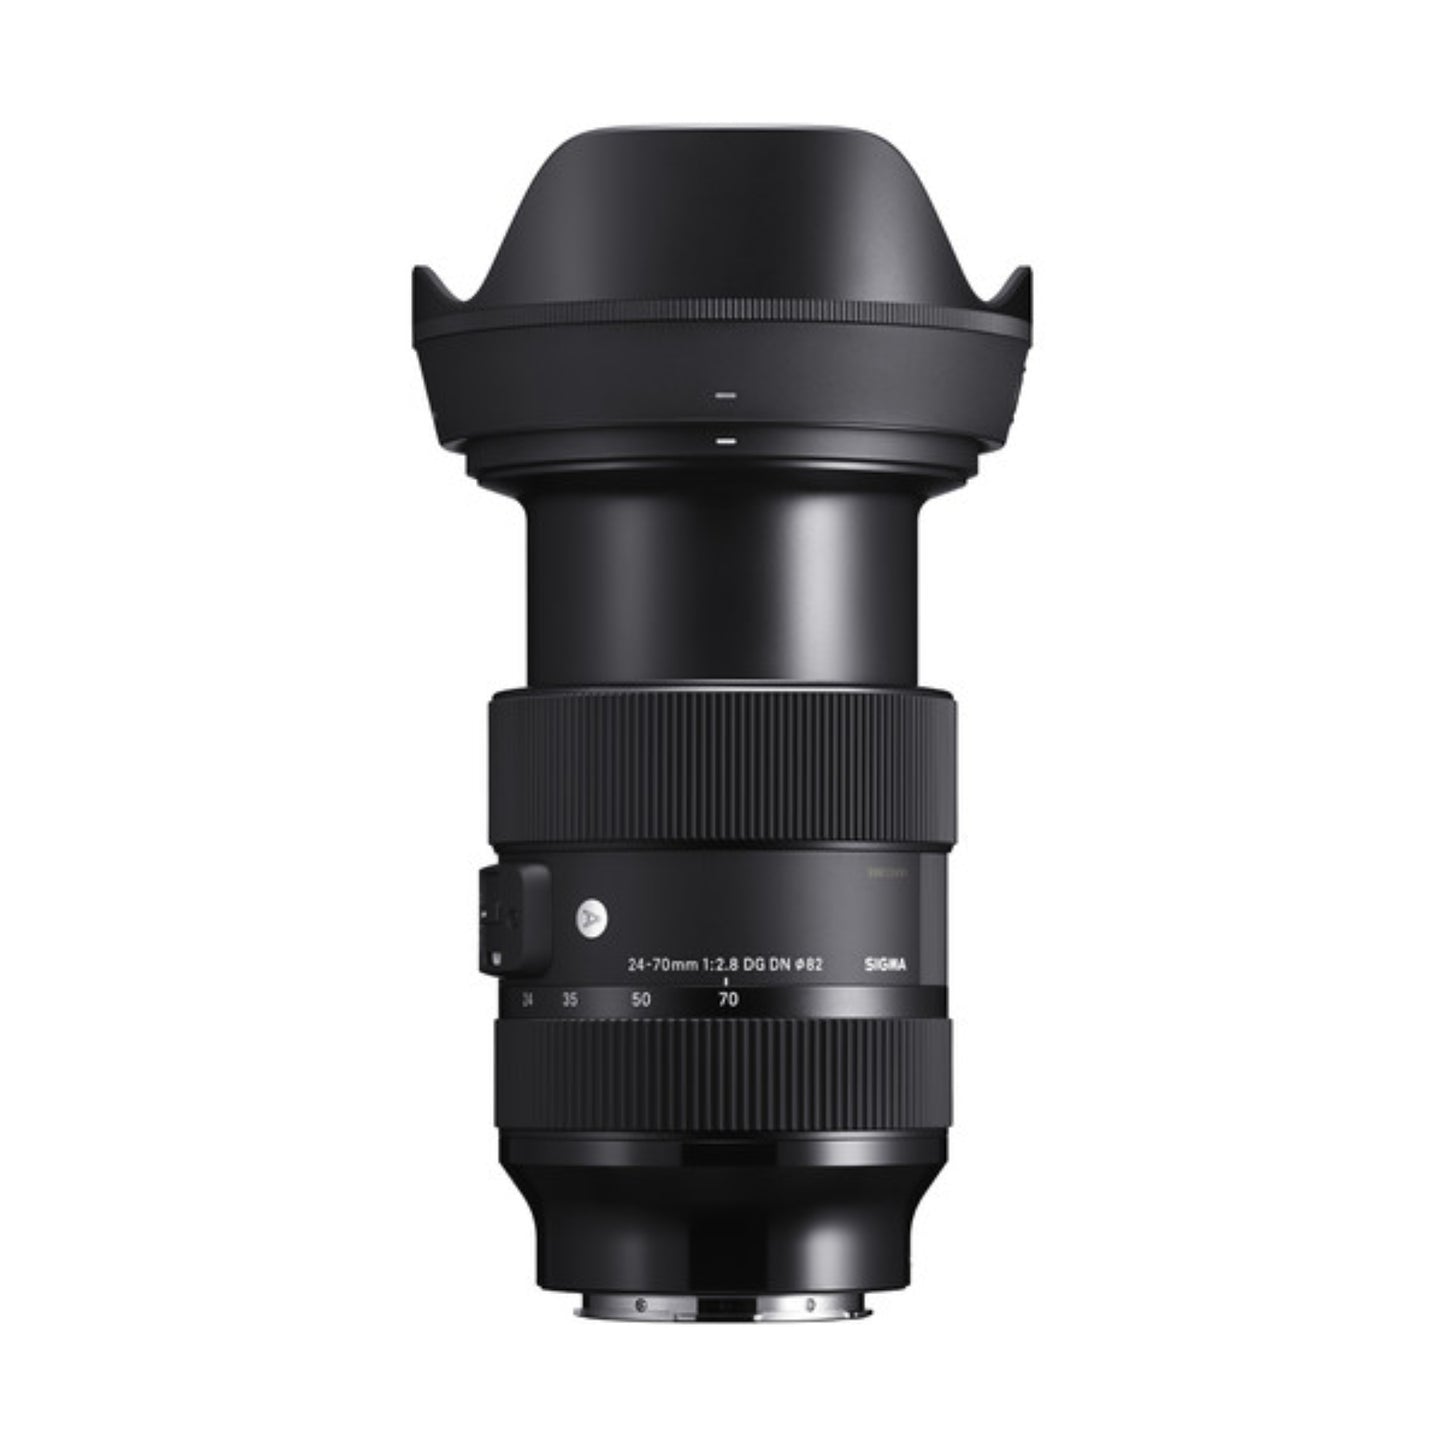 Buy Sigma 24-70mm f/2.8 DG DN Art Lens | Topic Store